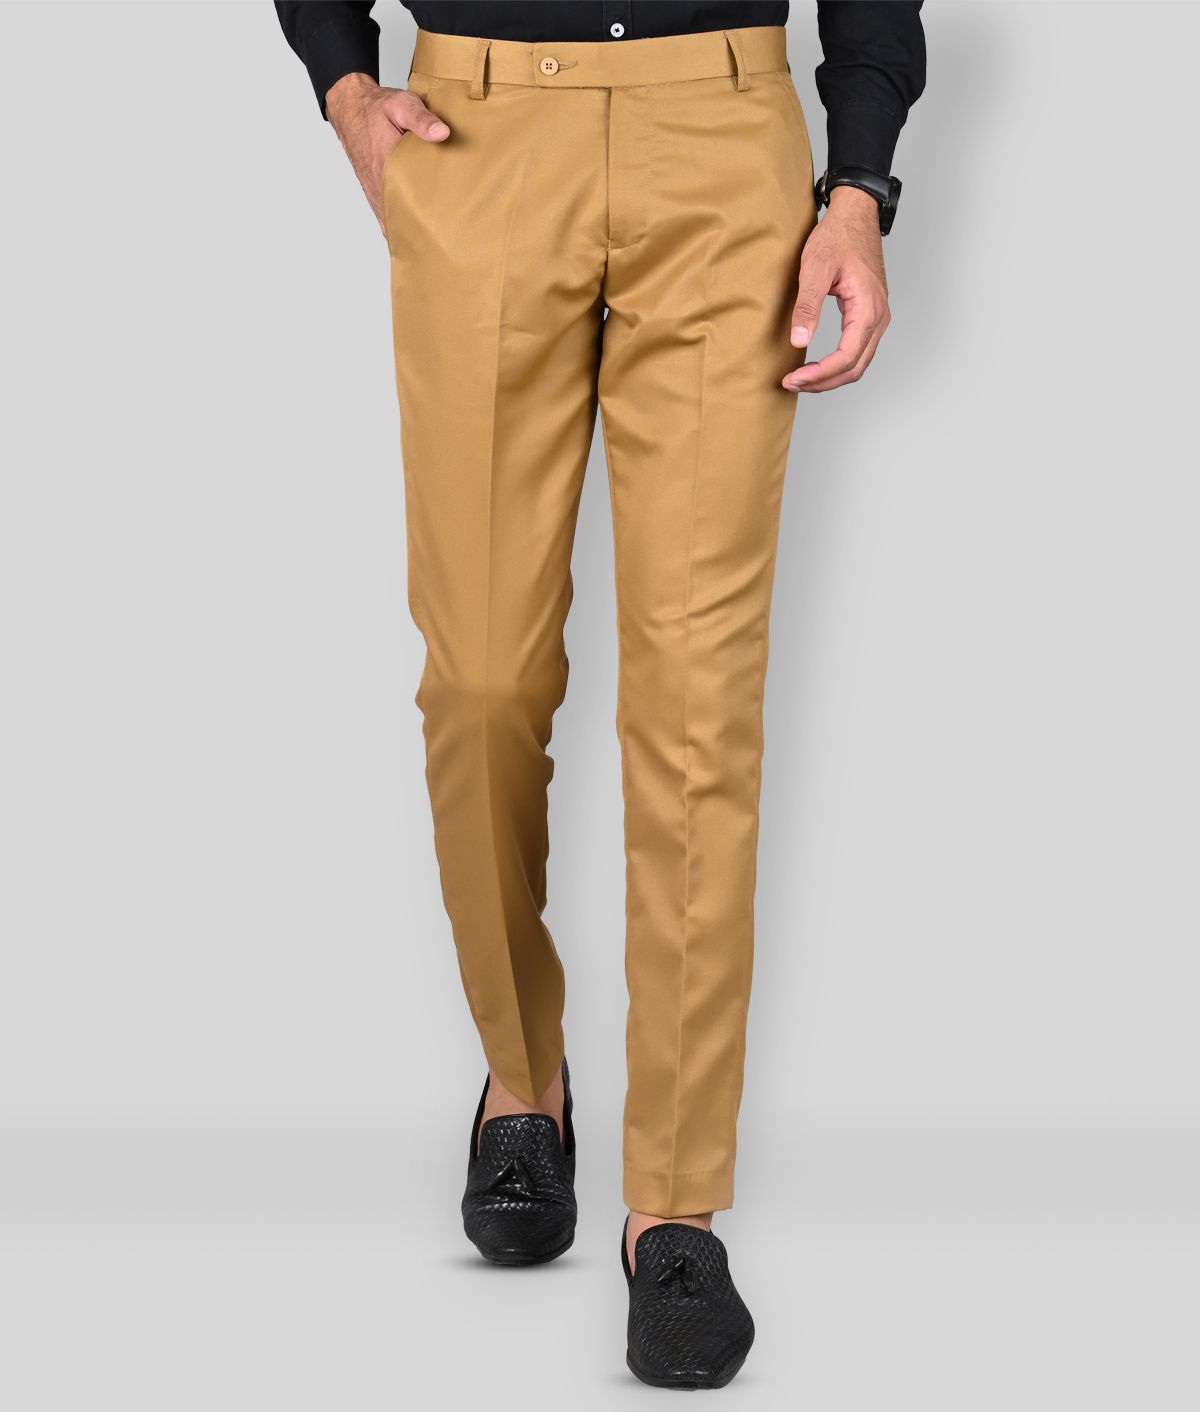     			MANCREW - Khaki Polycotton Slim - Fit Men's Formal Pants ( Pack of 1 )